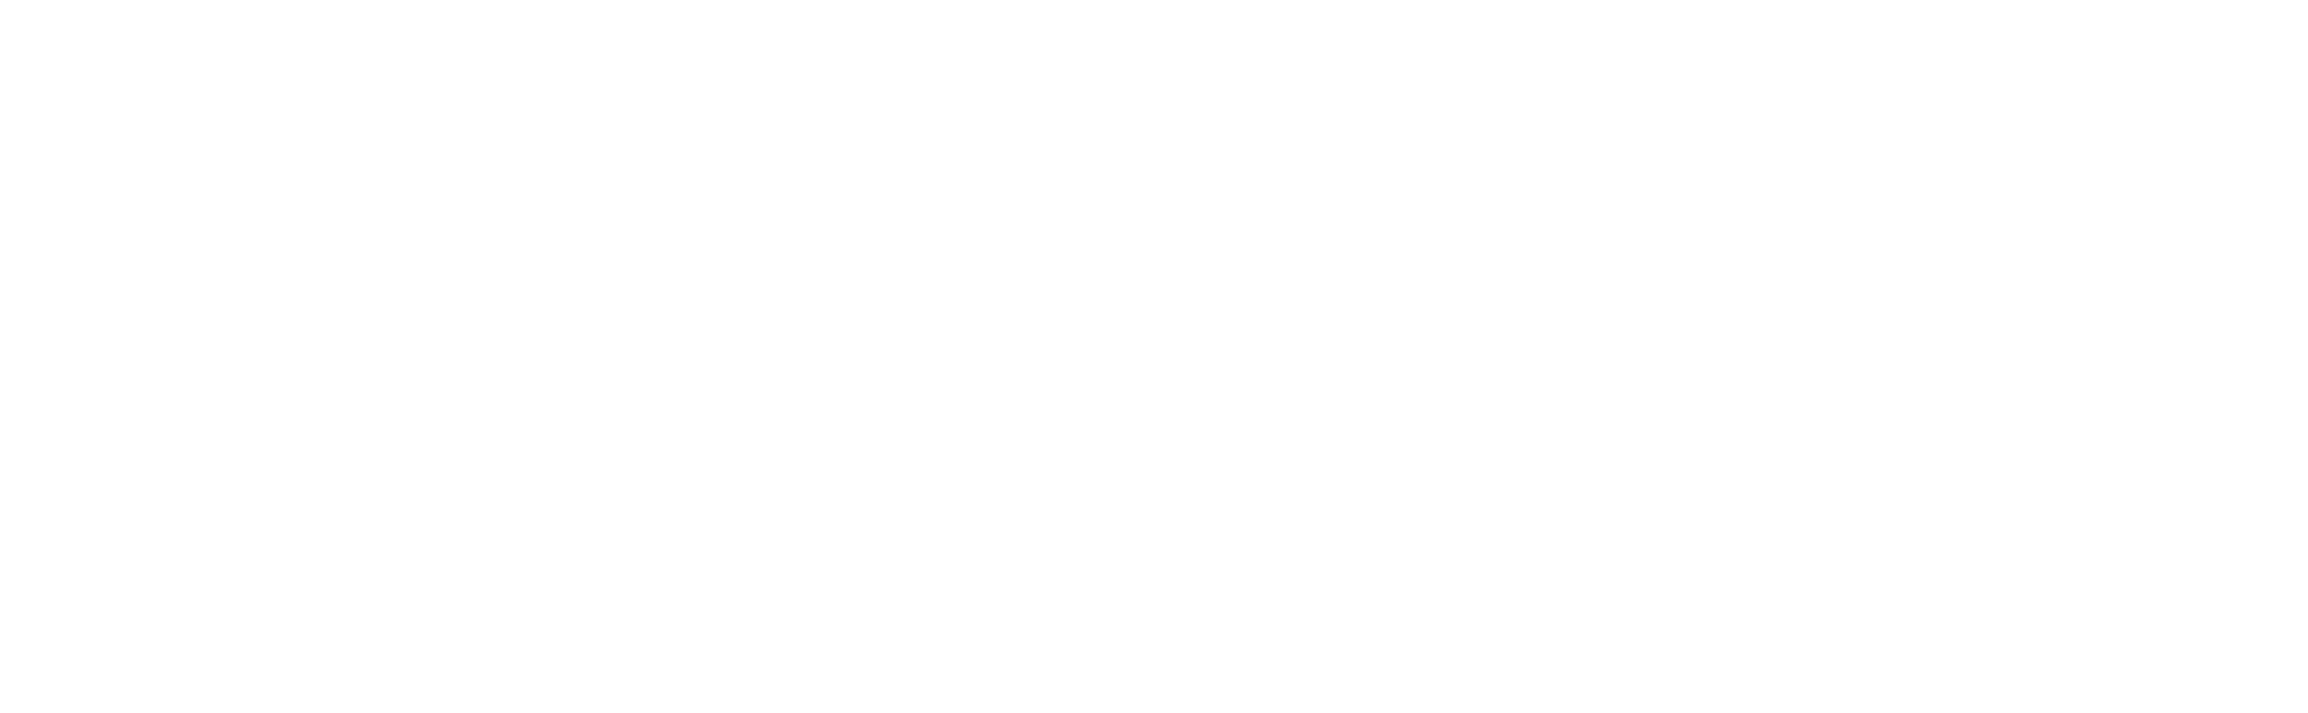 Shaw trust logo white